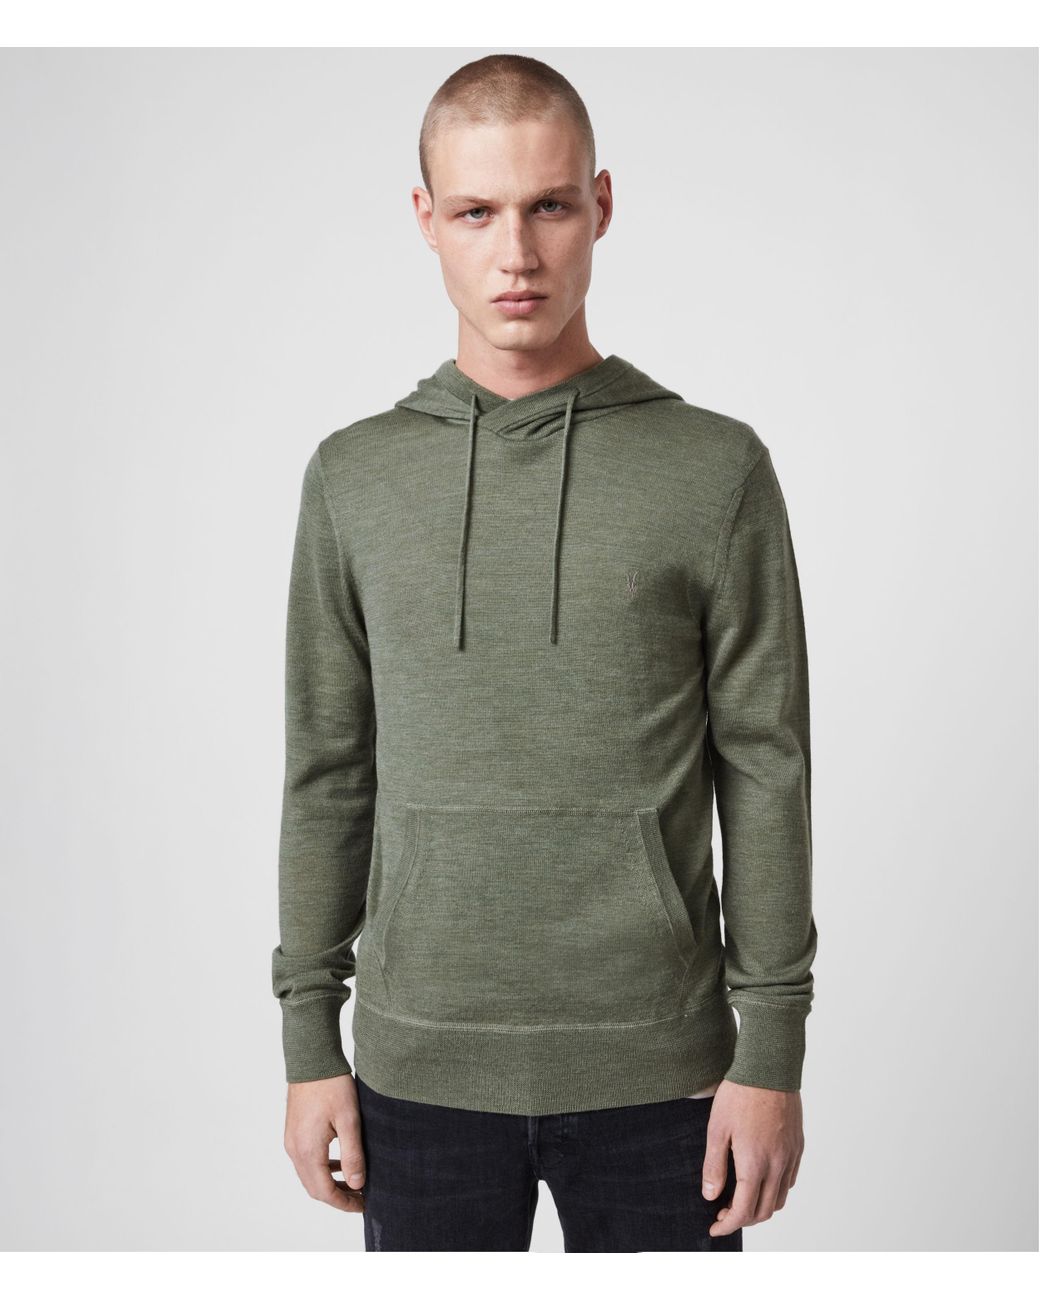 AllSaints Wool Mode Merino Hoodie in Green for Men - Lyst